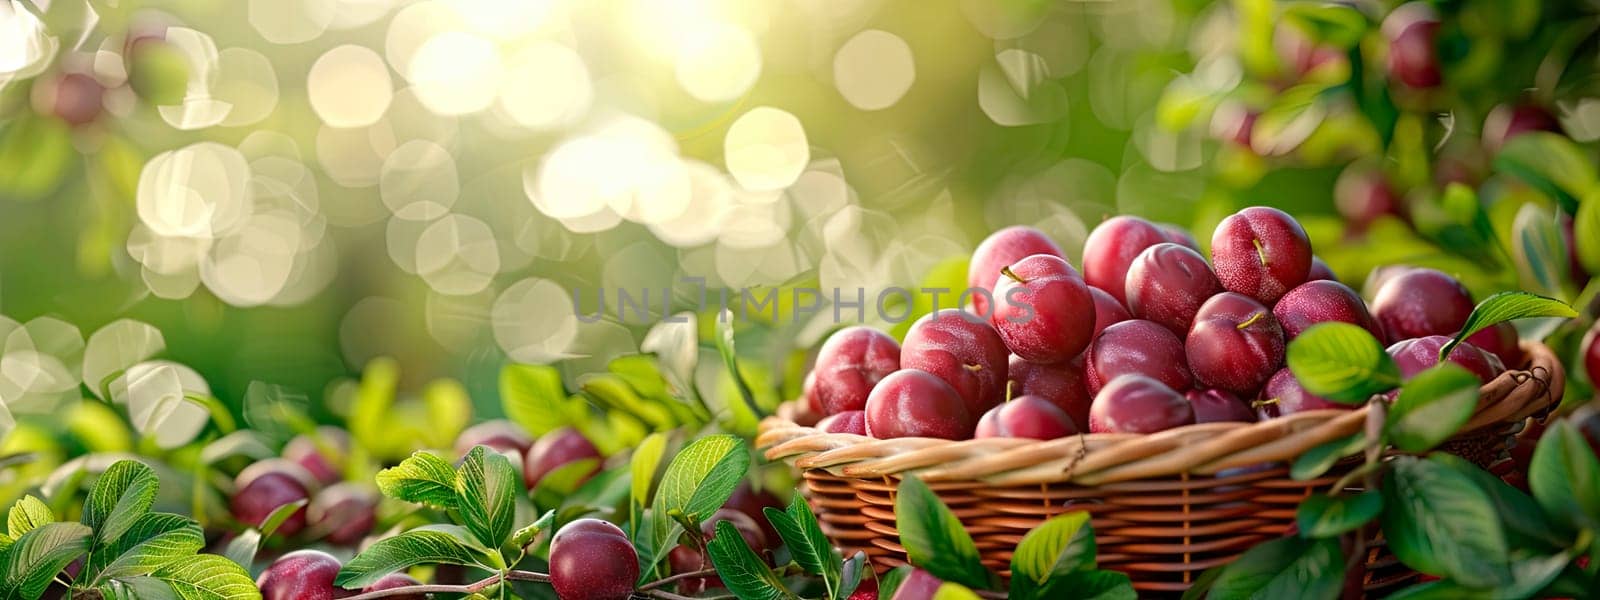 plum in a basket in the garden. selective focus. by yanadjana